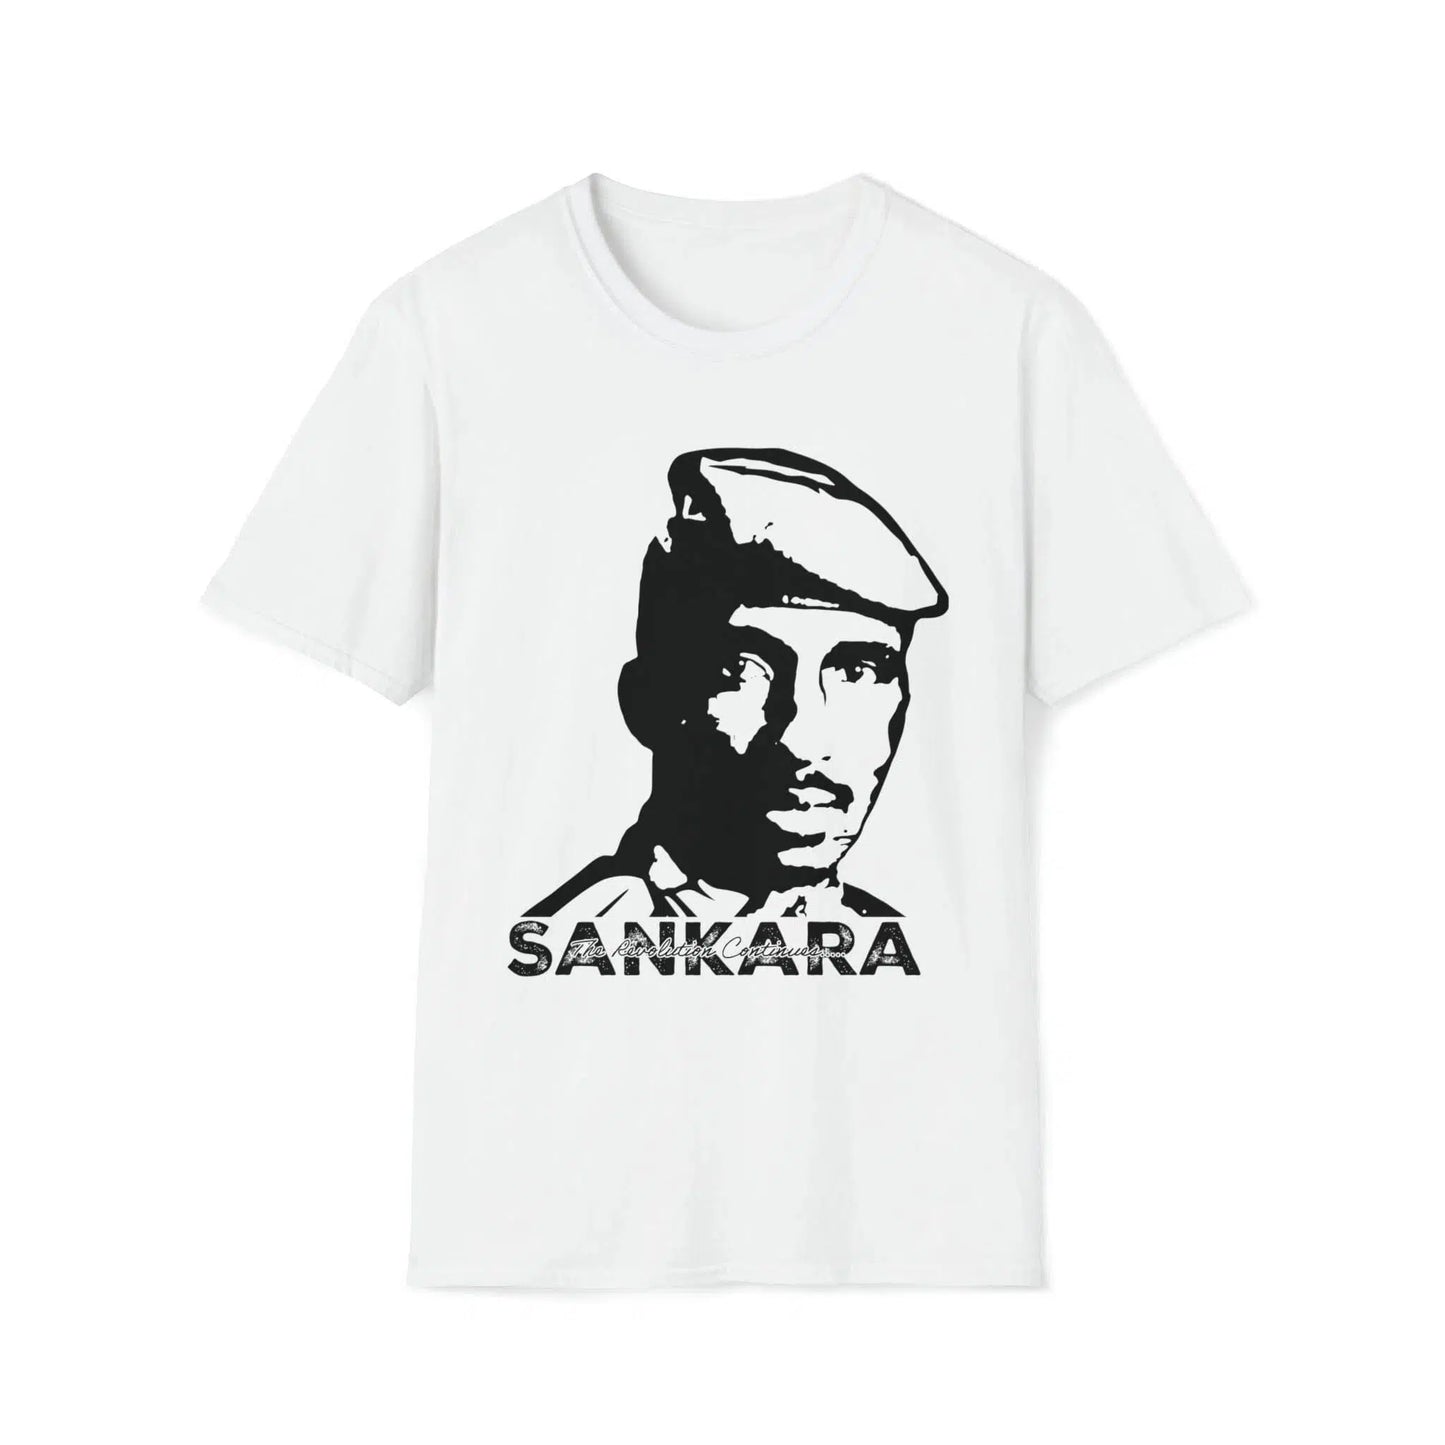 Thomas Sankara T shirt: Burkina Faso Pan African Icon